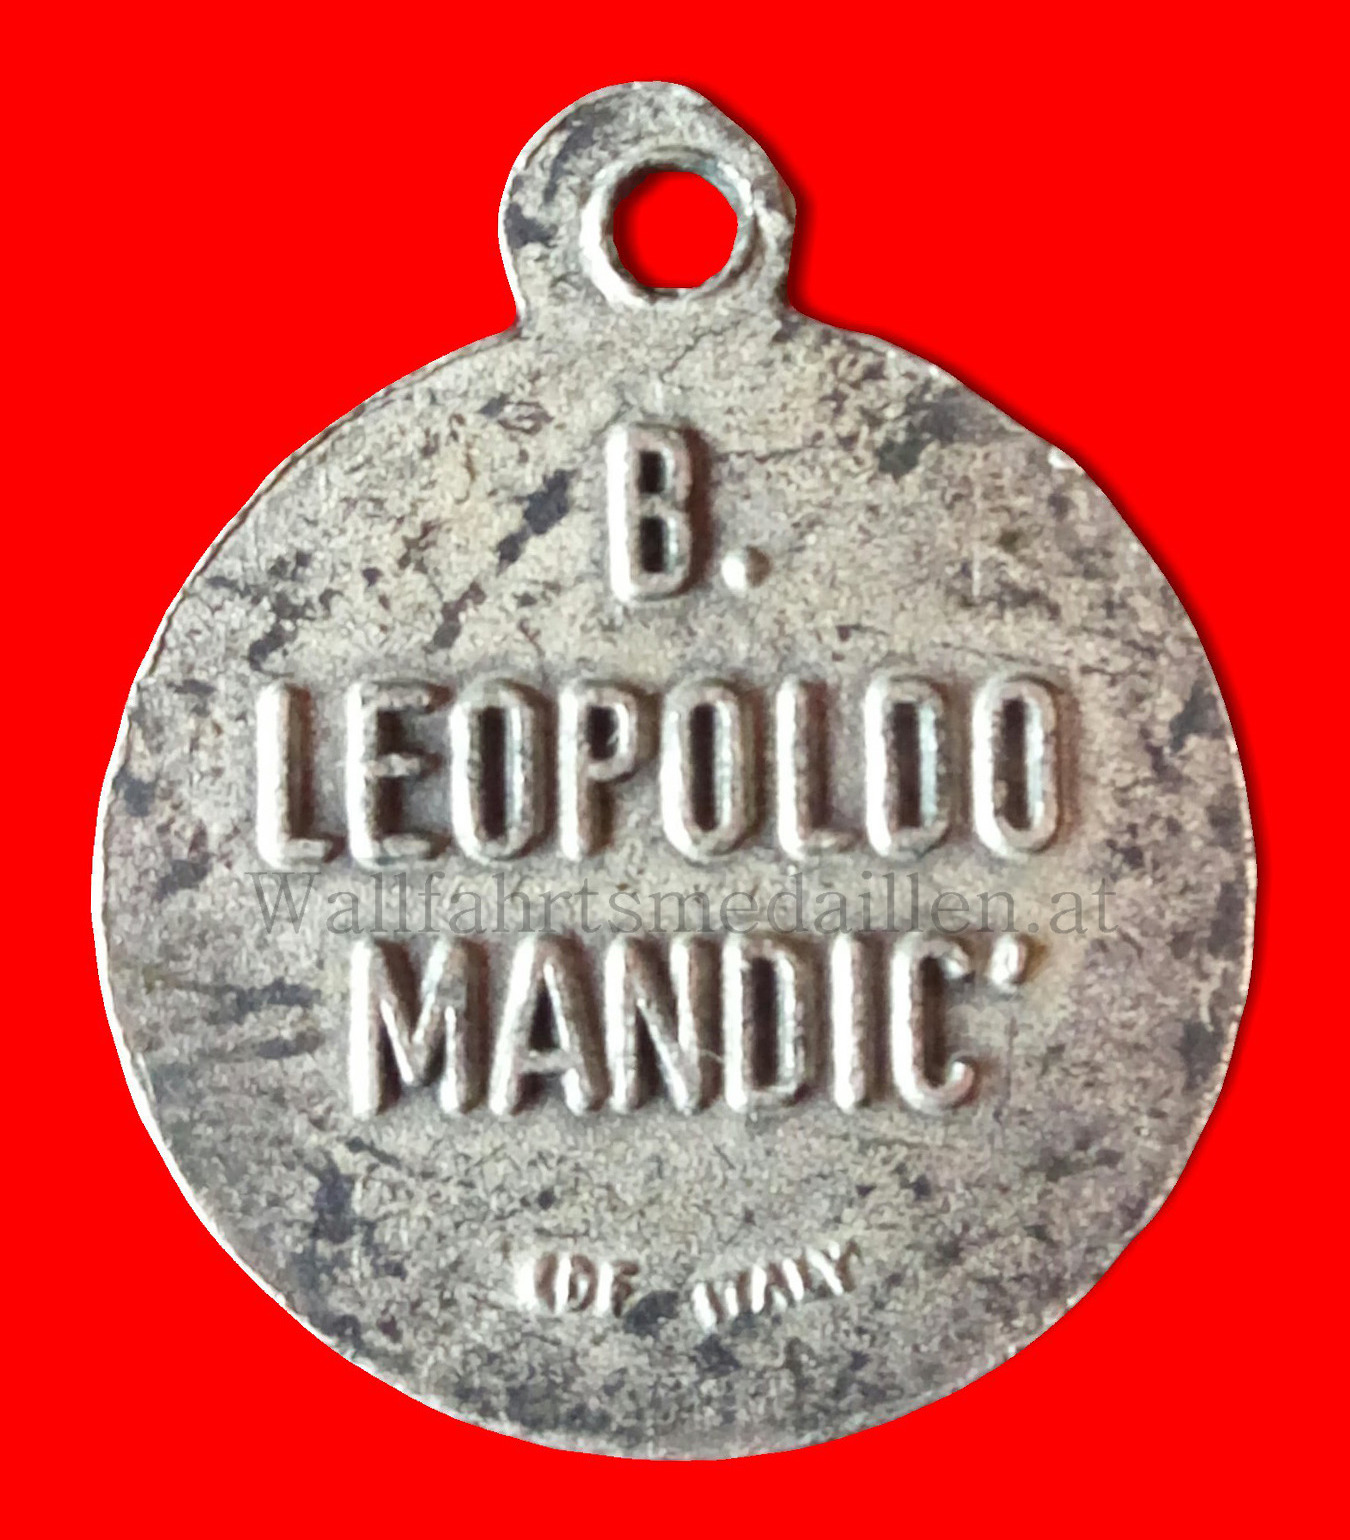 Seliger Leopold Mandic